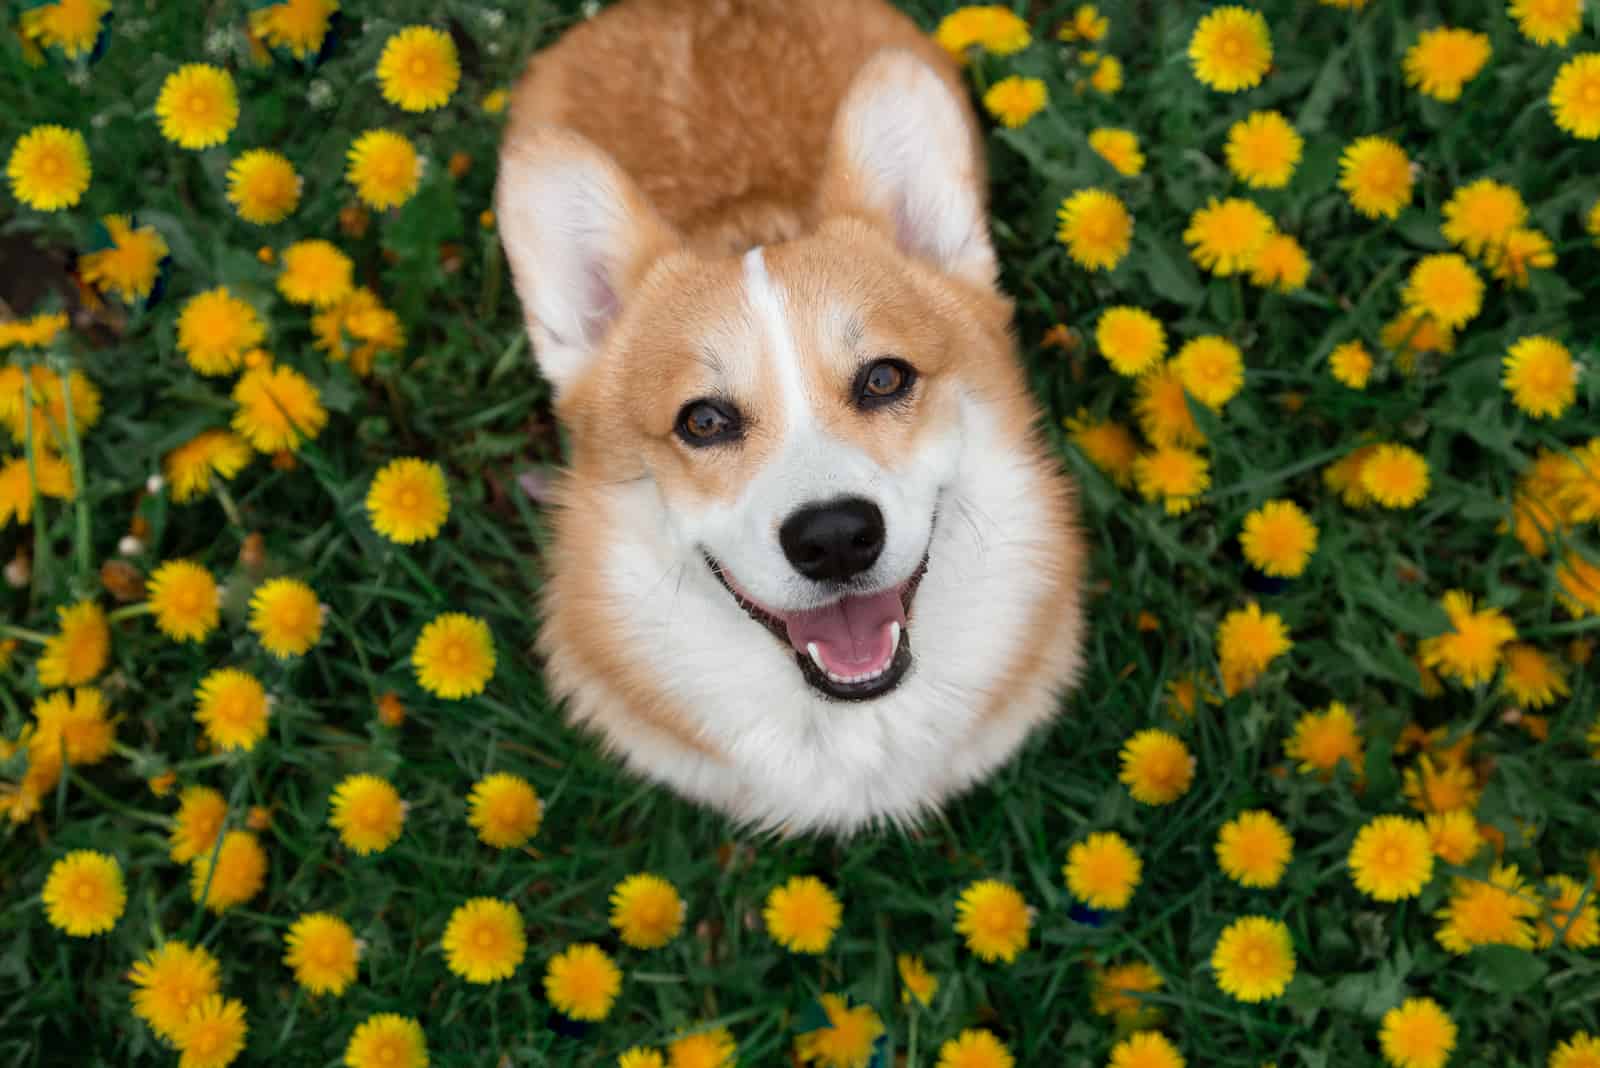 Happy corgi dog sitting in dandelions in the grass